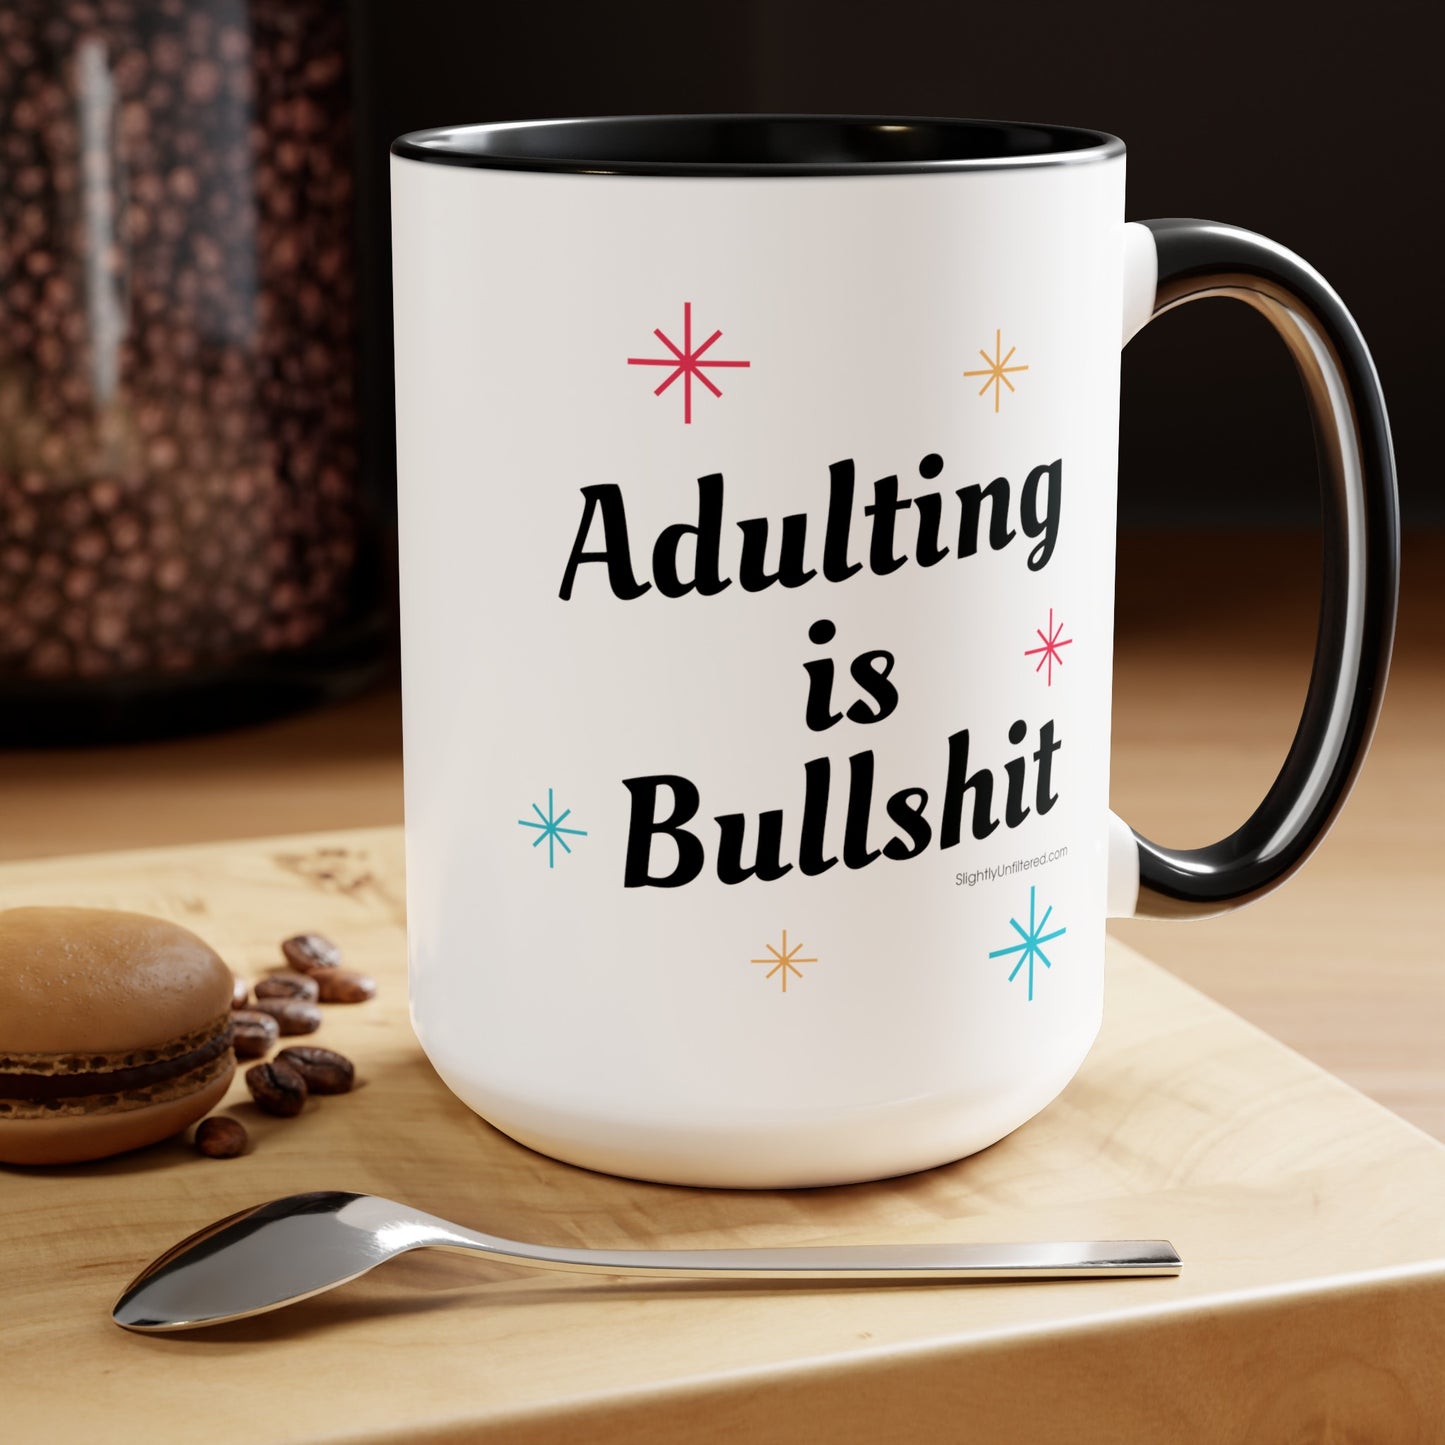 Adulting is Bullshit Mug - 15oz.